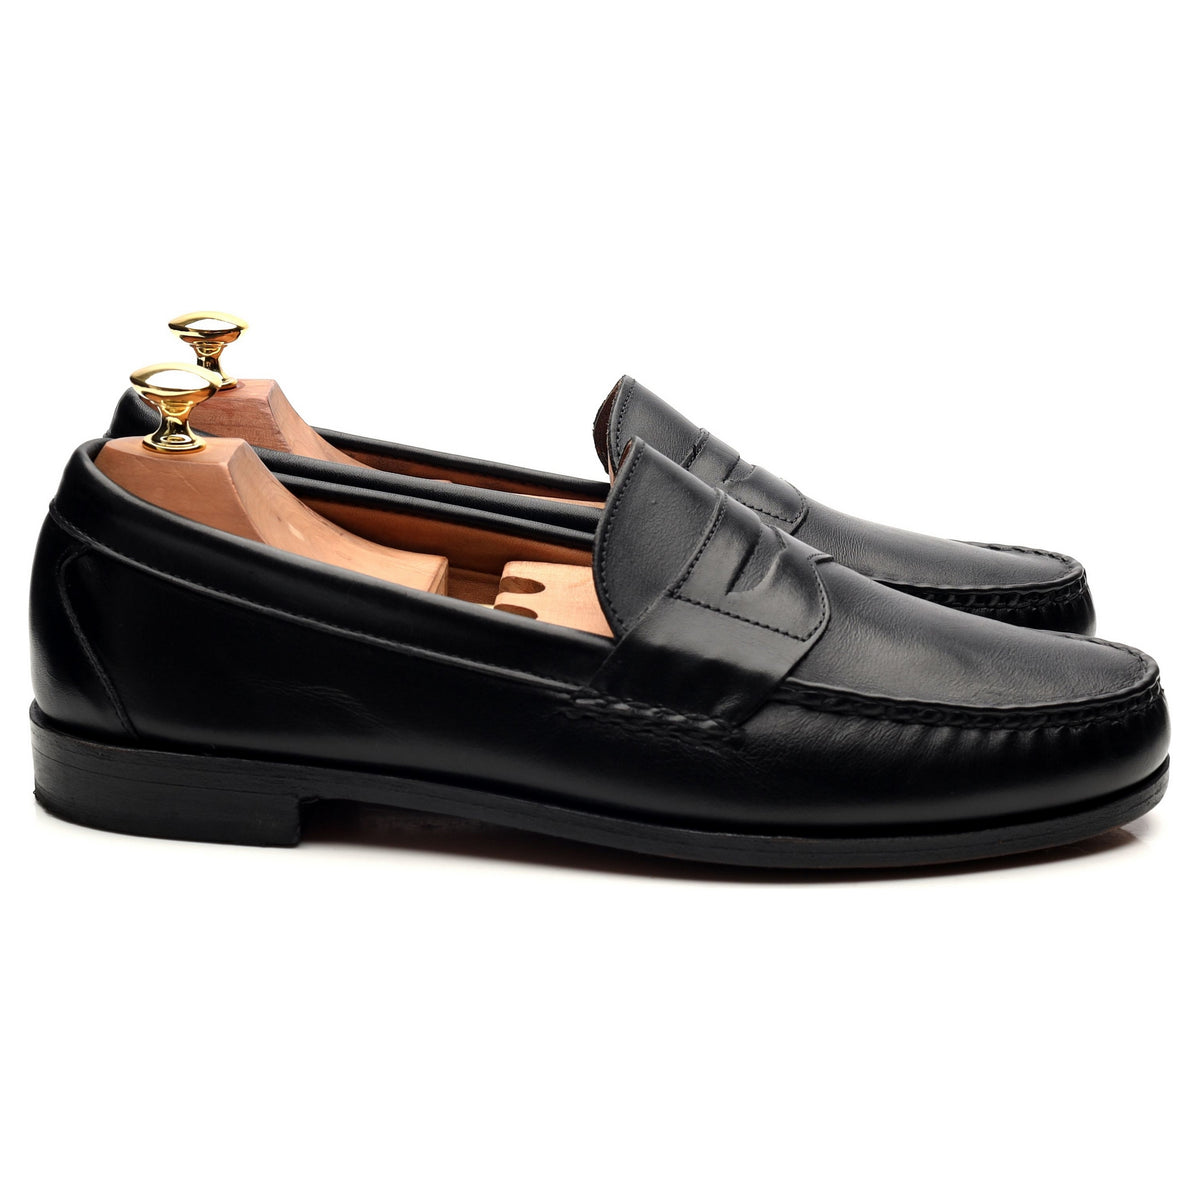 Black Leather Loafers UK 10 US 10.5